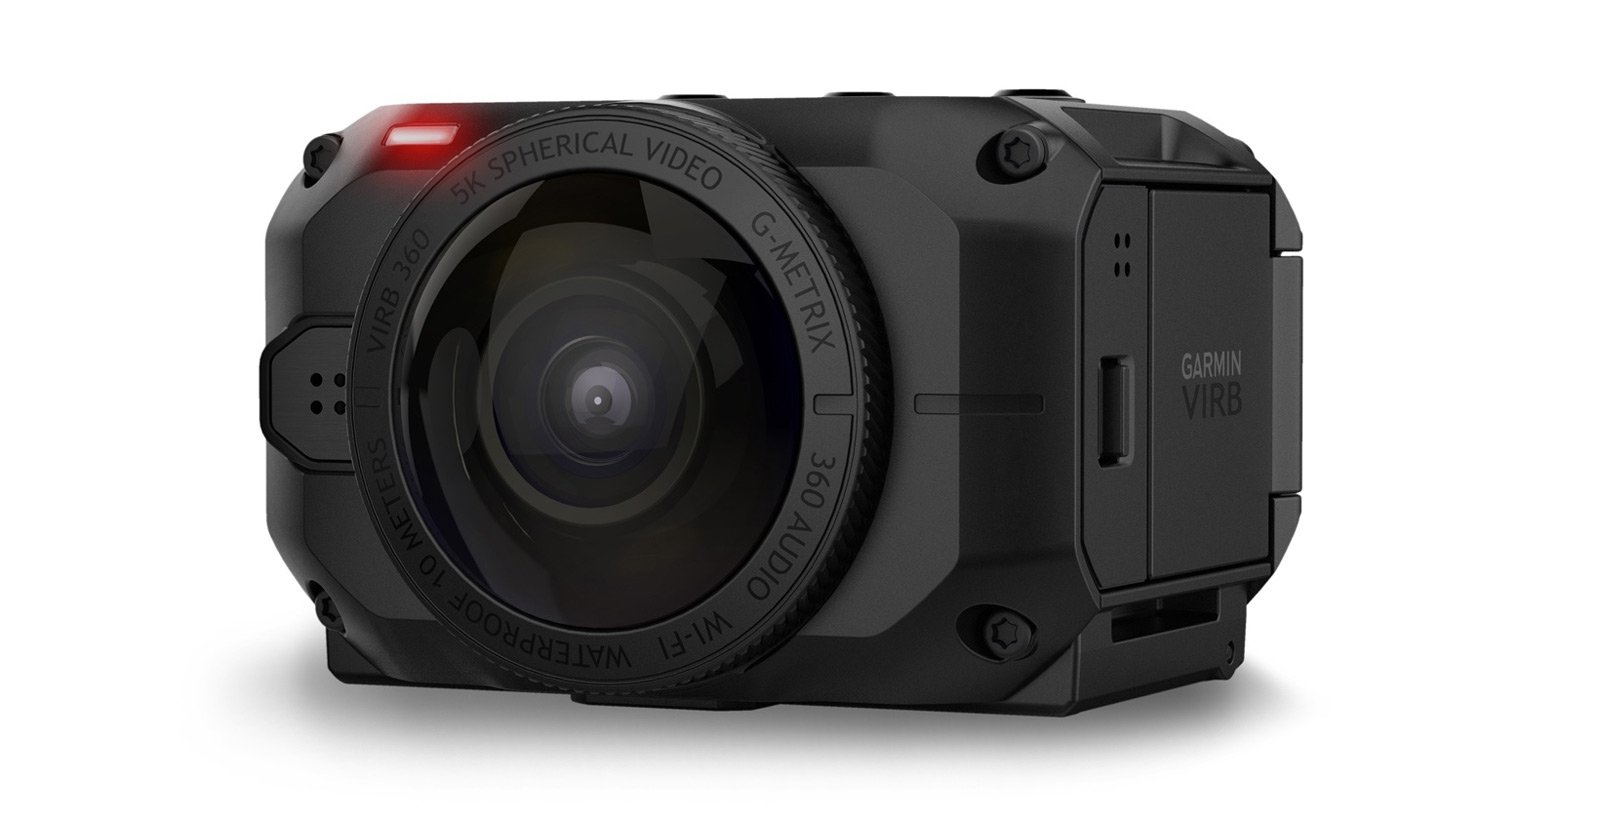 Hensigt Sinis give The Garmin VIRB 360 is a Waterproof 360° Camera That Shoots 5.7K | PetaPixel